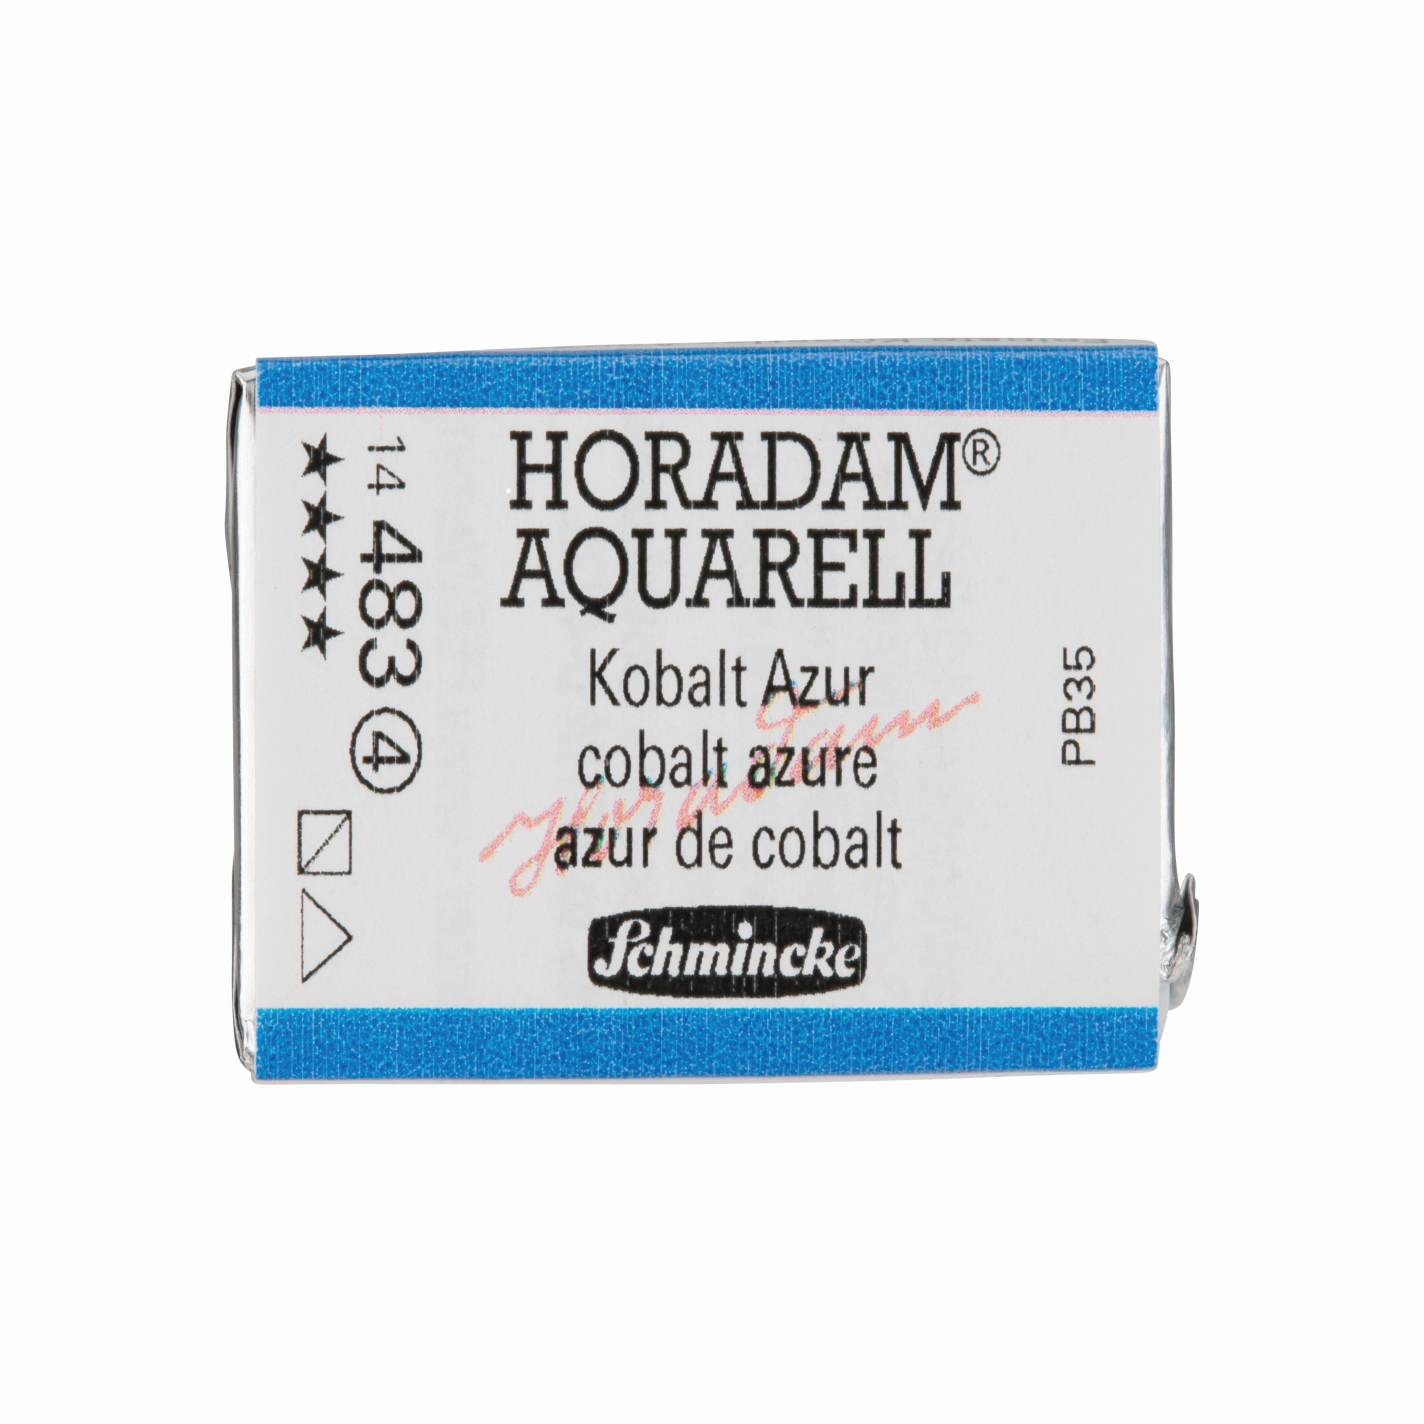 Schmincke Horadam Aquarell pans 1/1 pan Cobalt Azure